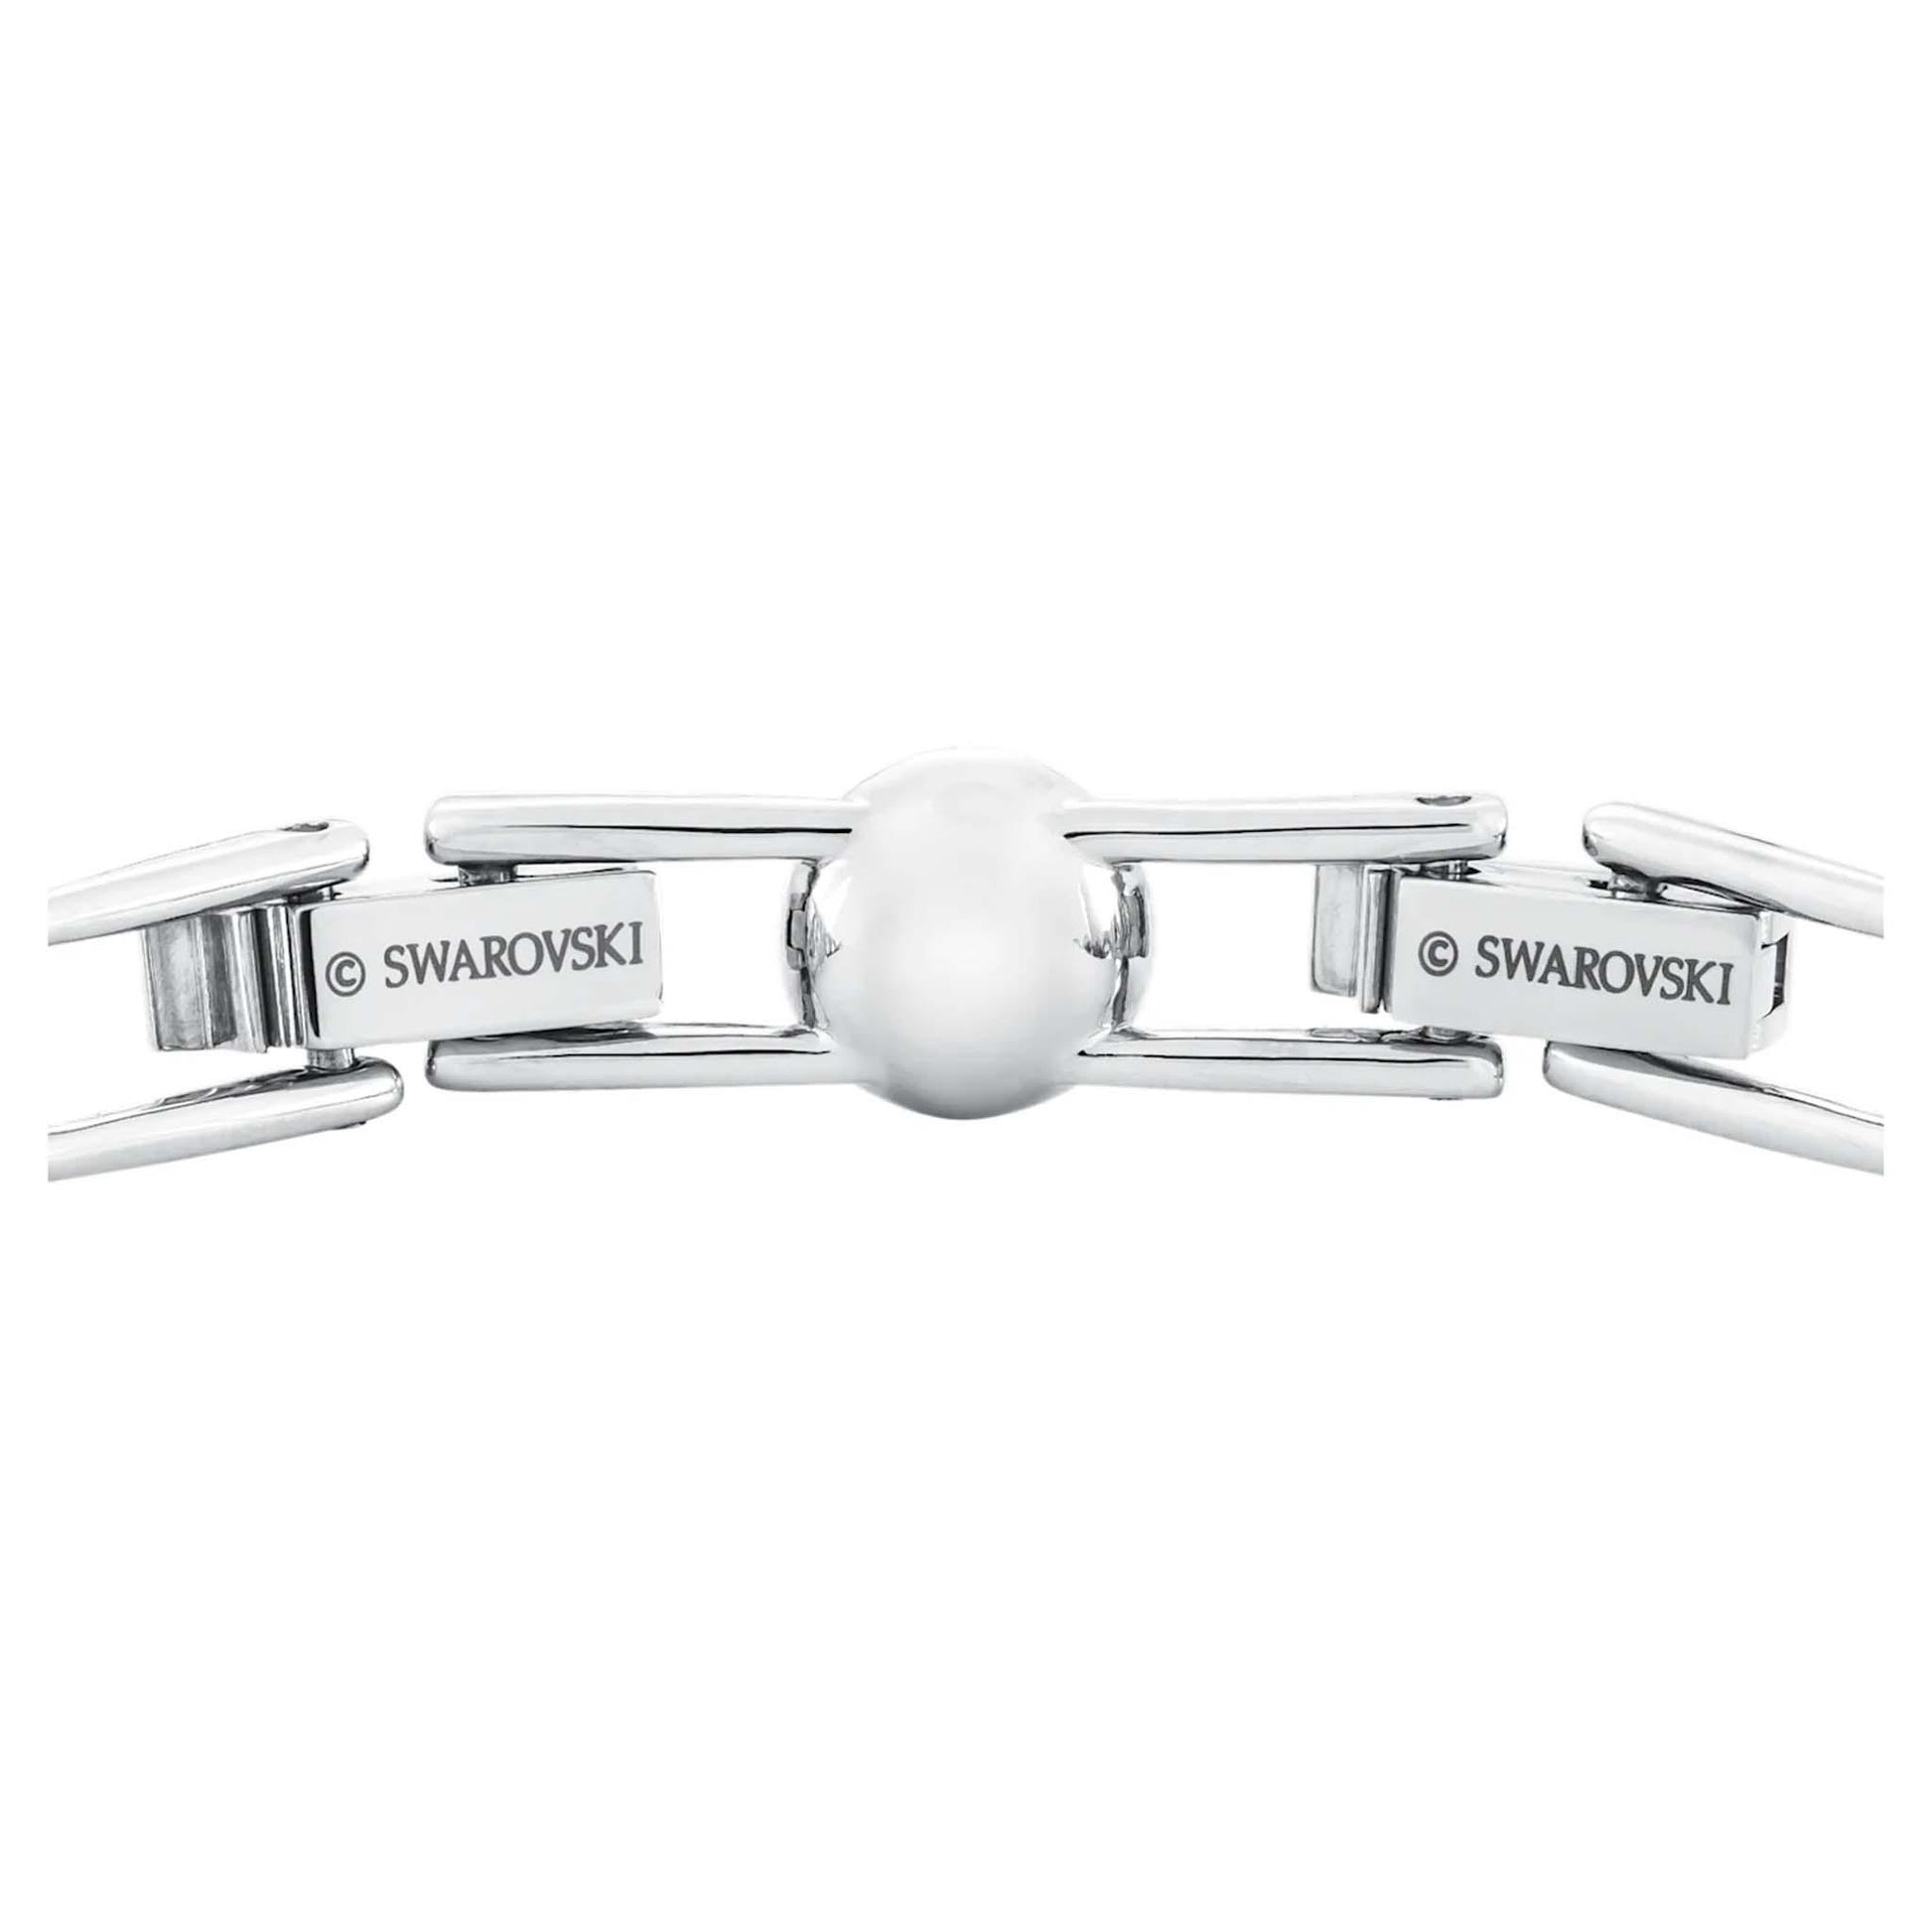 Angelic bracelet - Cosmos Boutique New Jersey